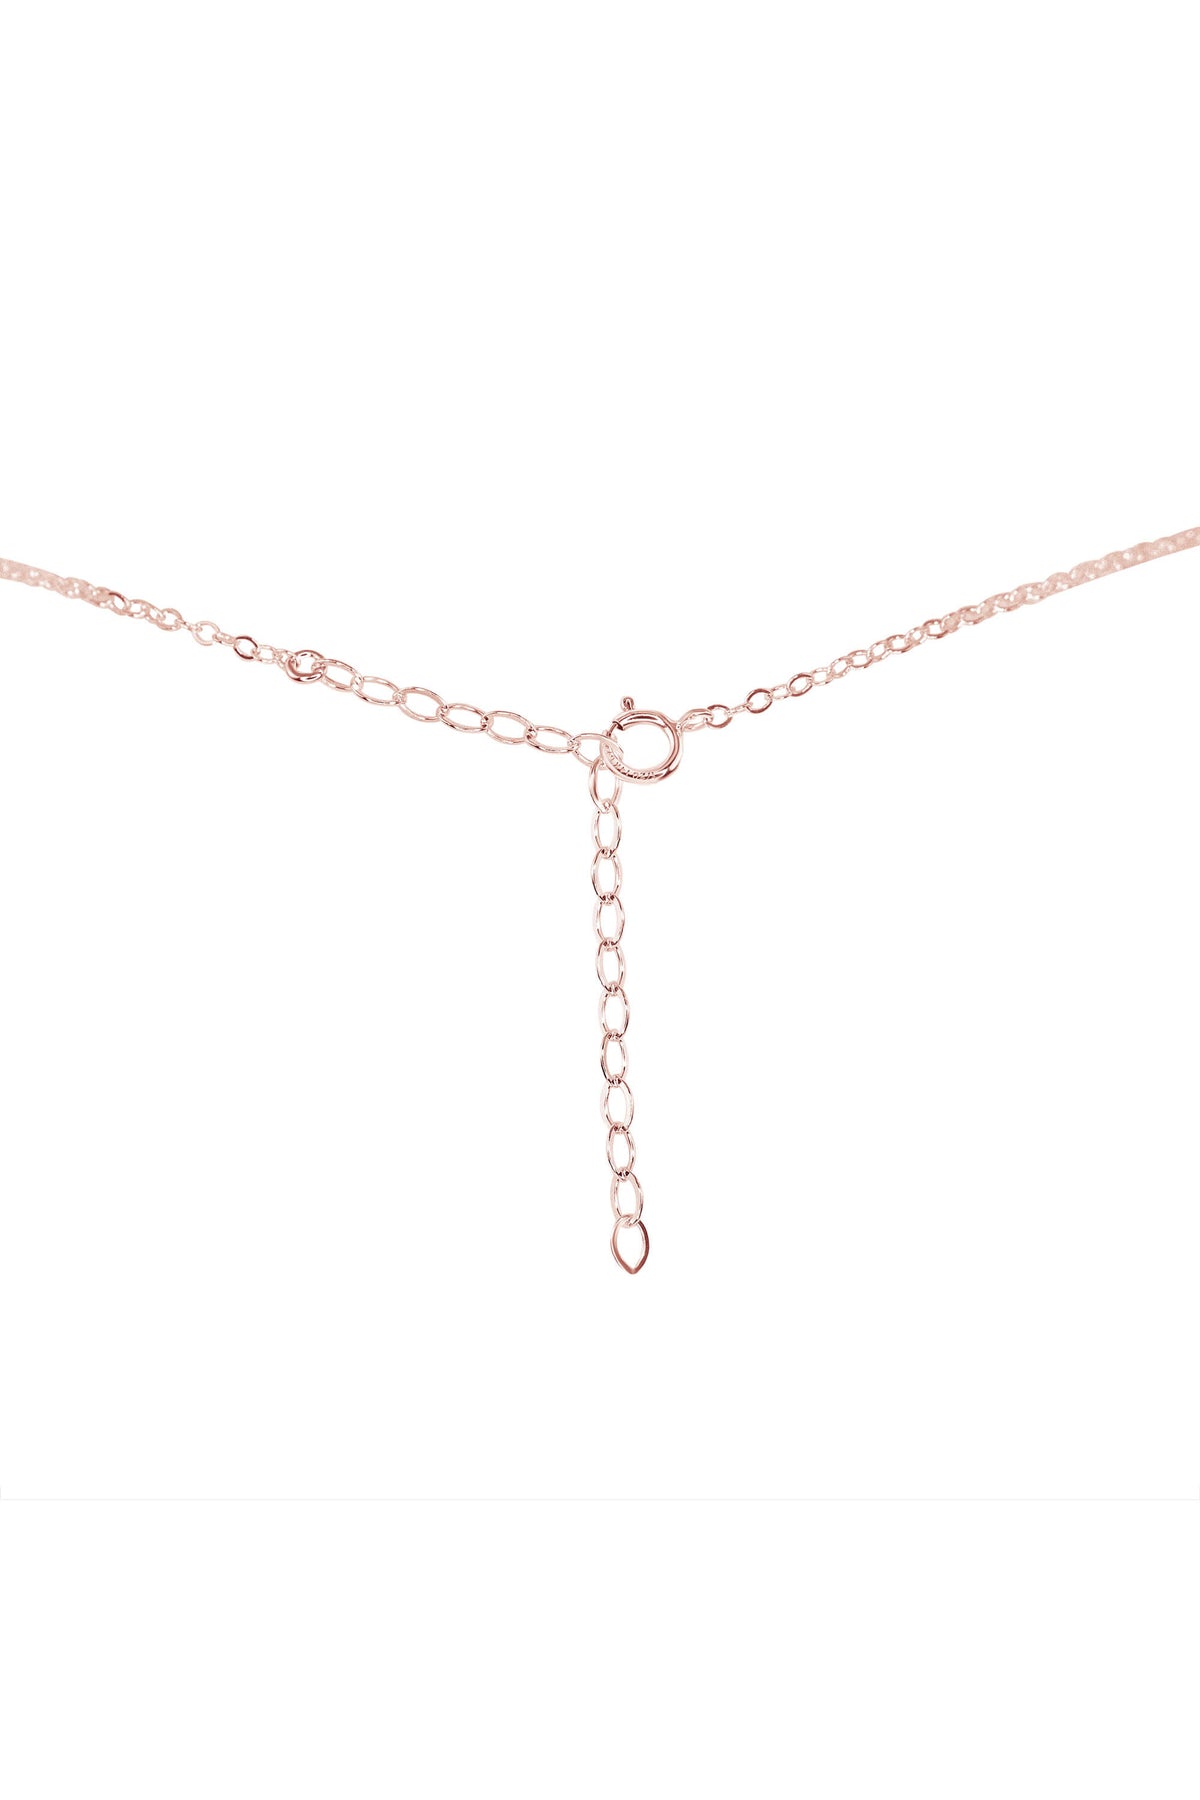 Raw Crystal Pendant Choker - Sunstone - 14K Rose Gold Fill - Luna Tide Handmade Jewellery